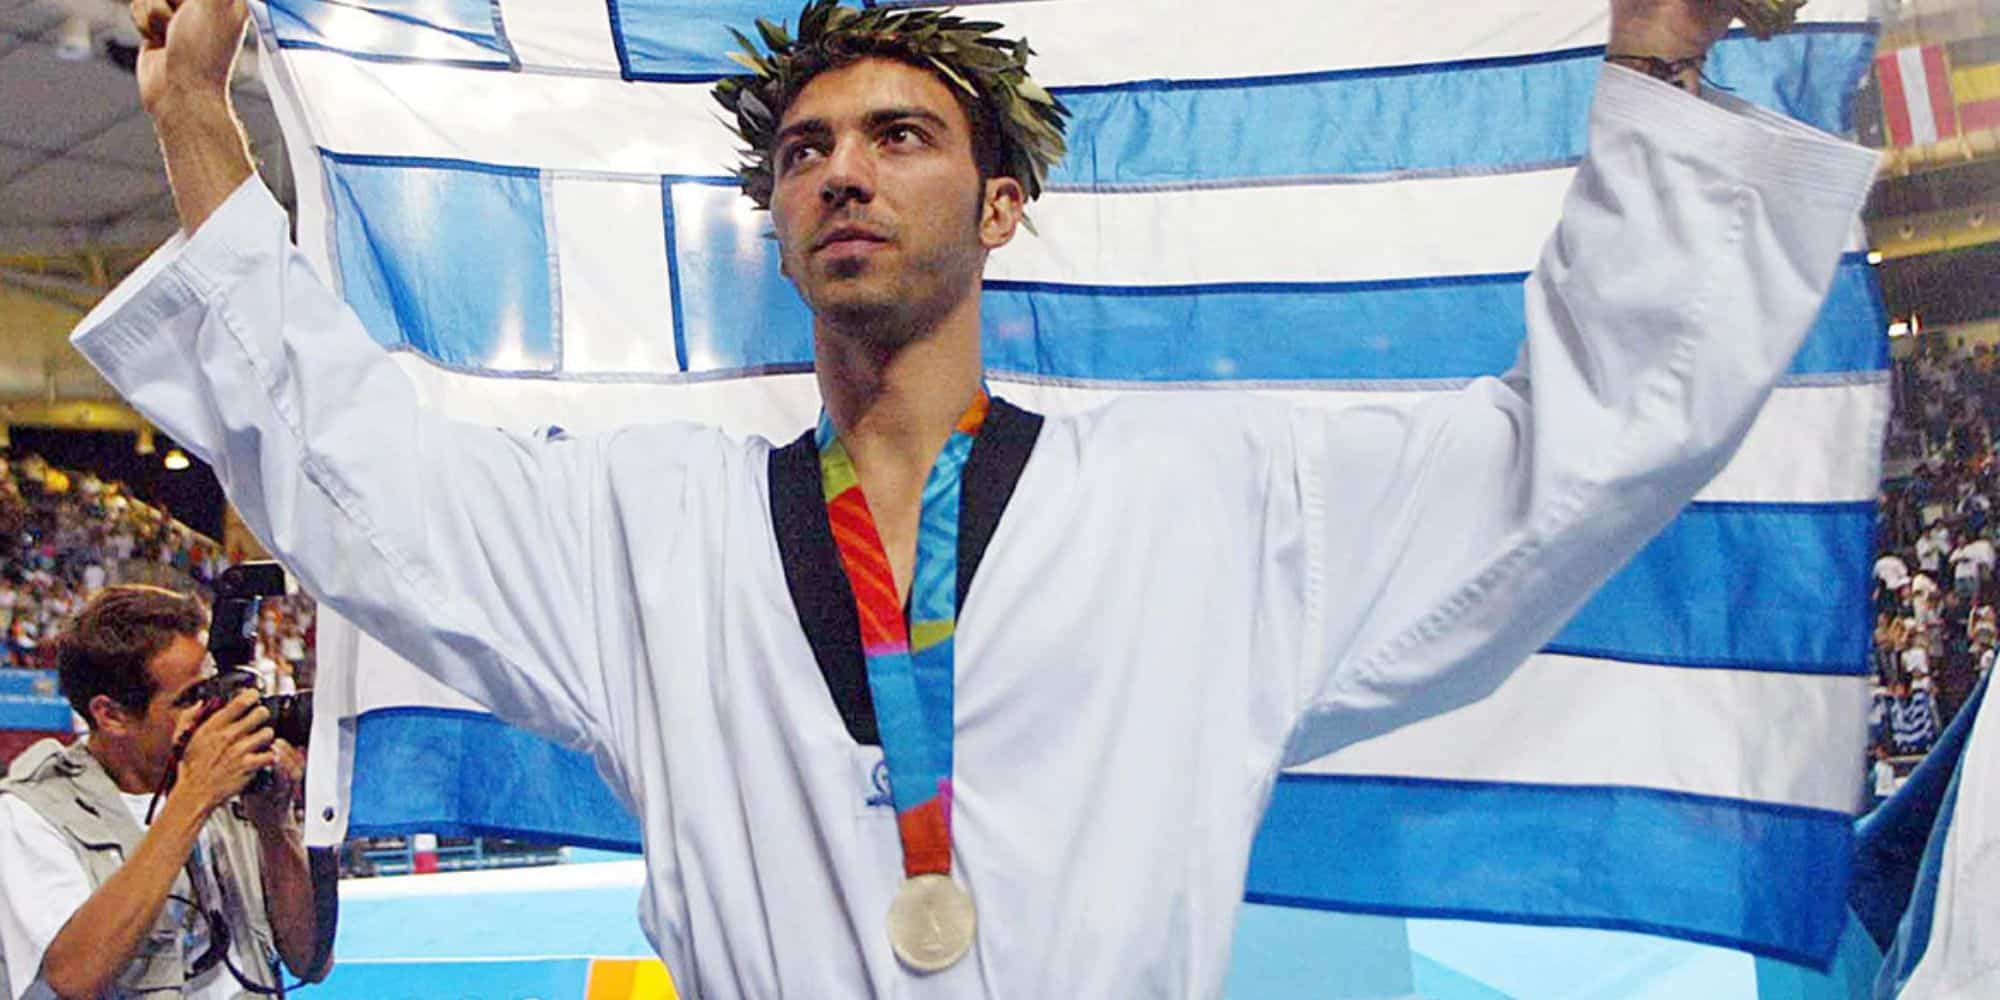 O Ολυμπιονίκης Αλέξανδρος Νικολαΐδης με το μετάλλιο